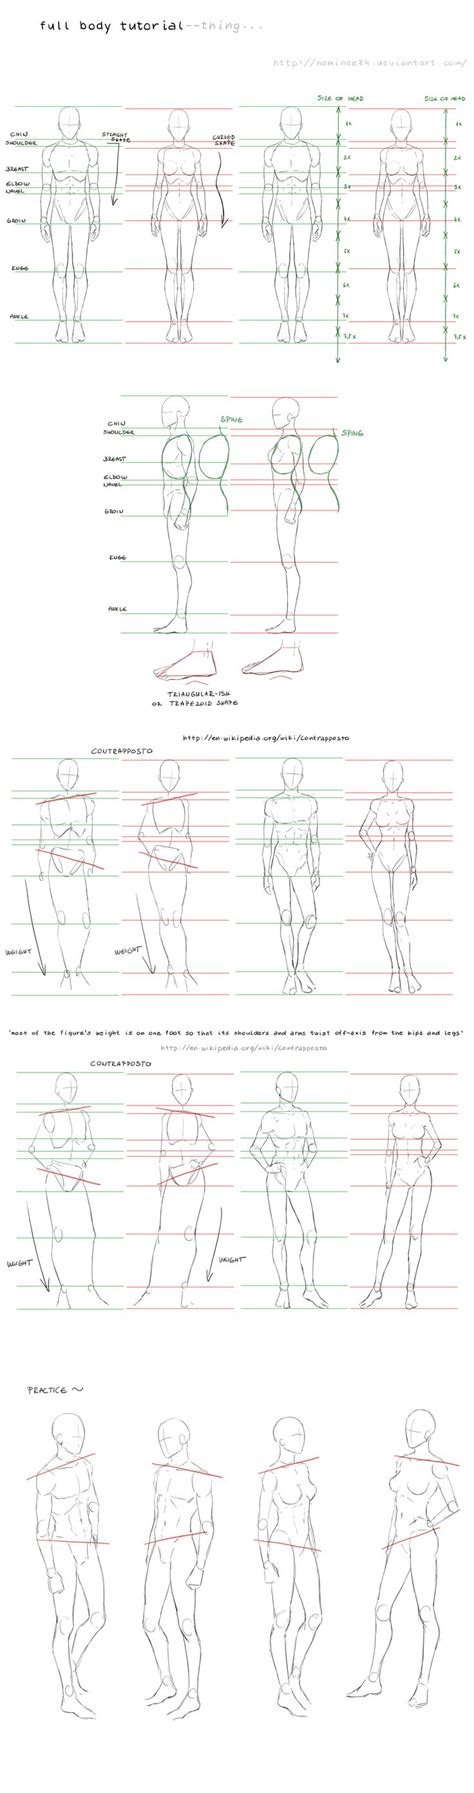 Full Body Tutorial By Nominee84 On Deviantart Body Tutorial Anatomy